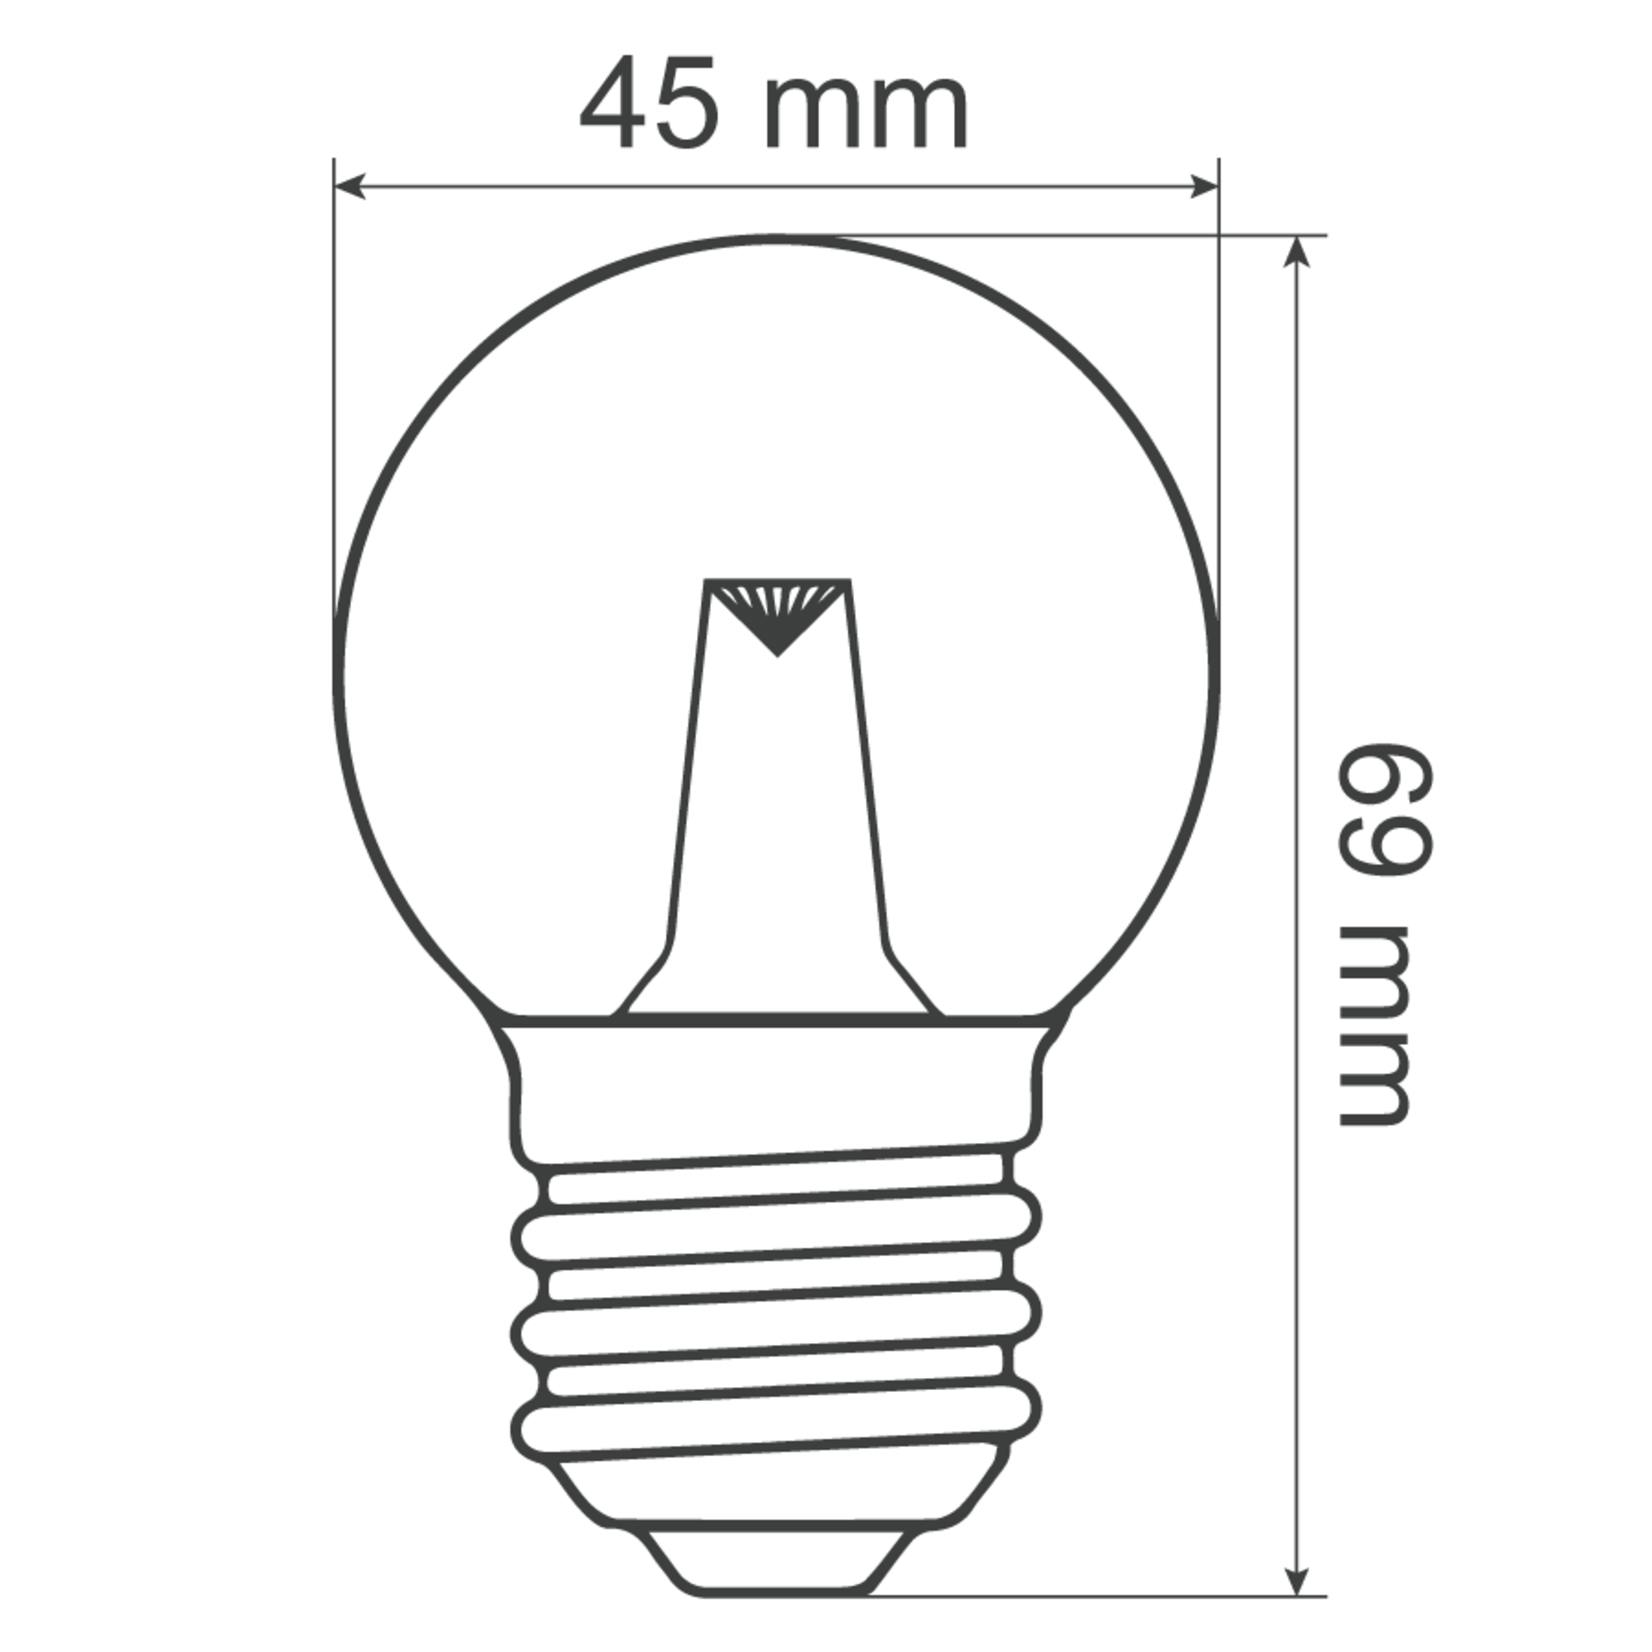 Pack de 30 Bombillas LED E27 Regulables de Luz Cálida 2 vatios - Clase Energética A+